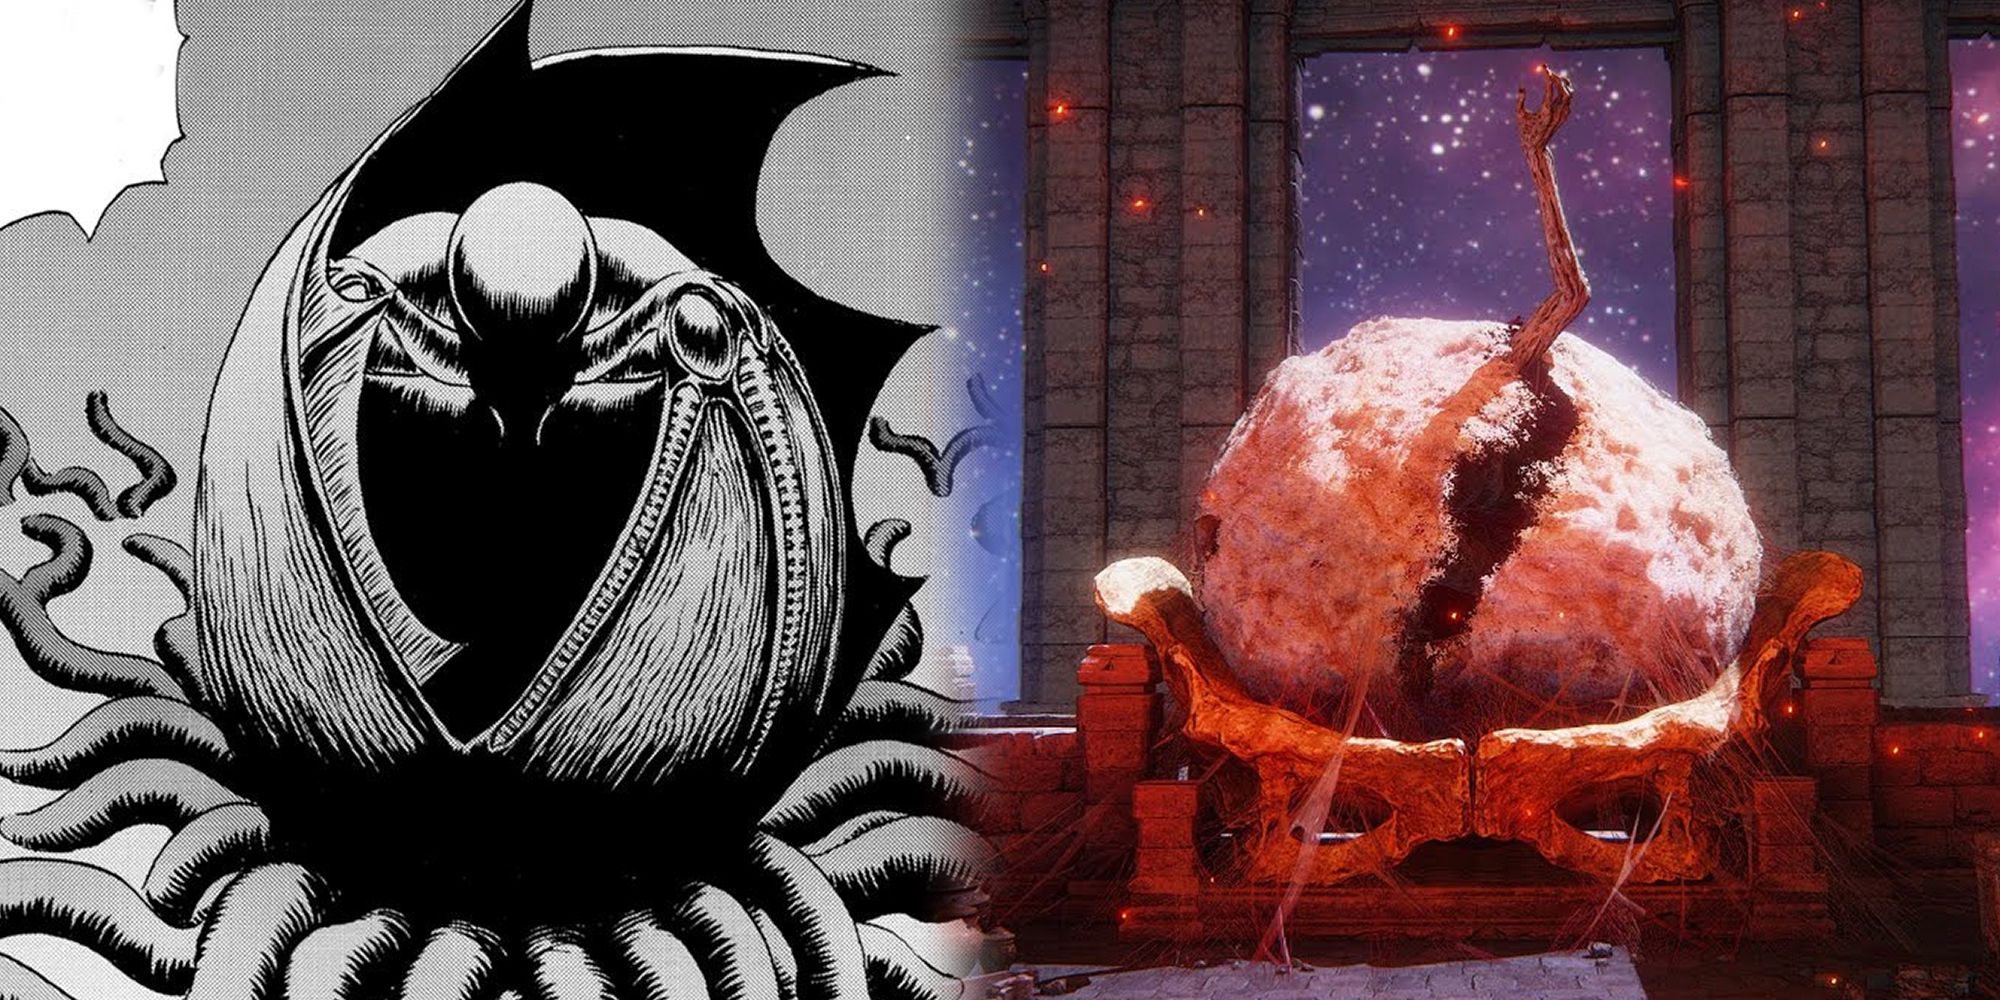 Elden Ring - Side By Side Comparison Of Femto Awakening In Berserk And Miquella's Cocoon